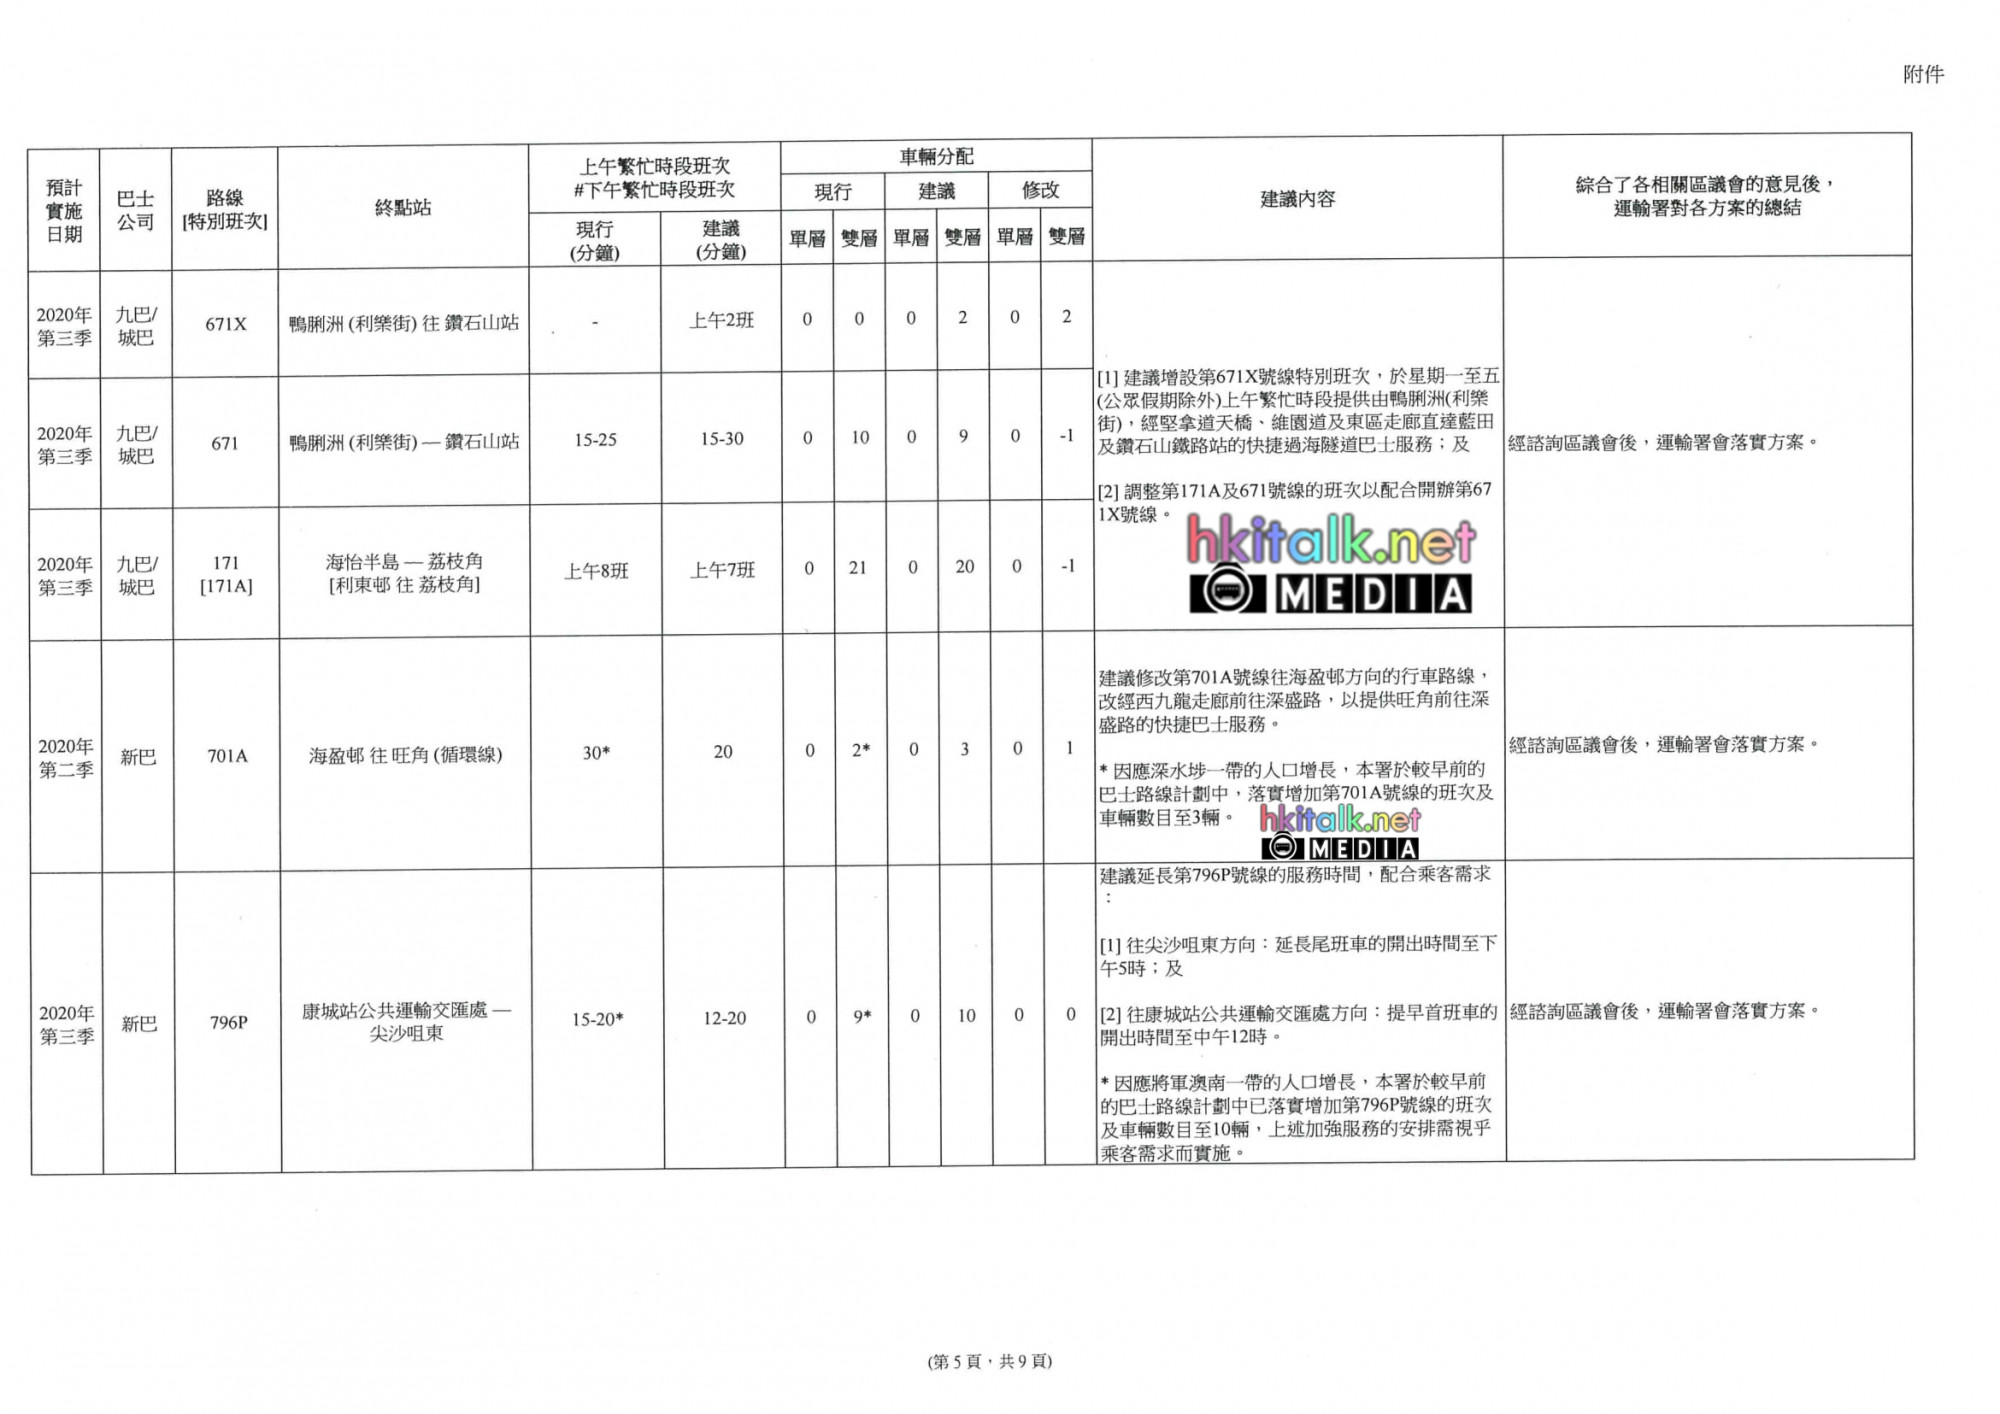 Route Planning Programme 2020-2021 for Yau Tsim Mong-06.jpg